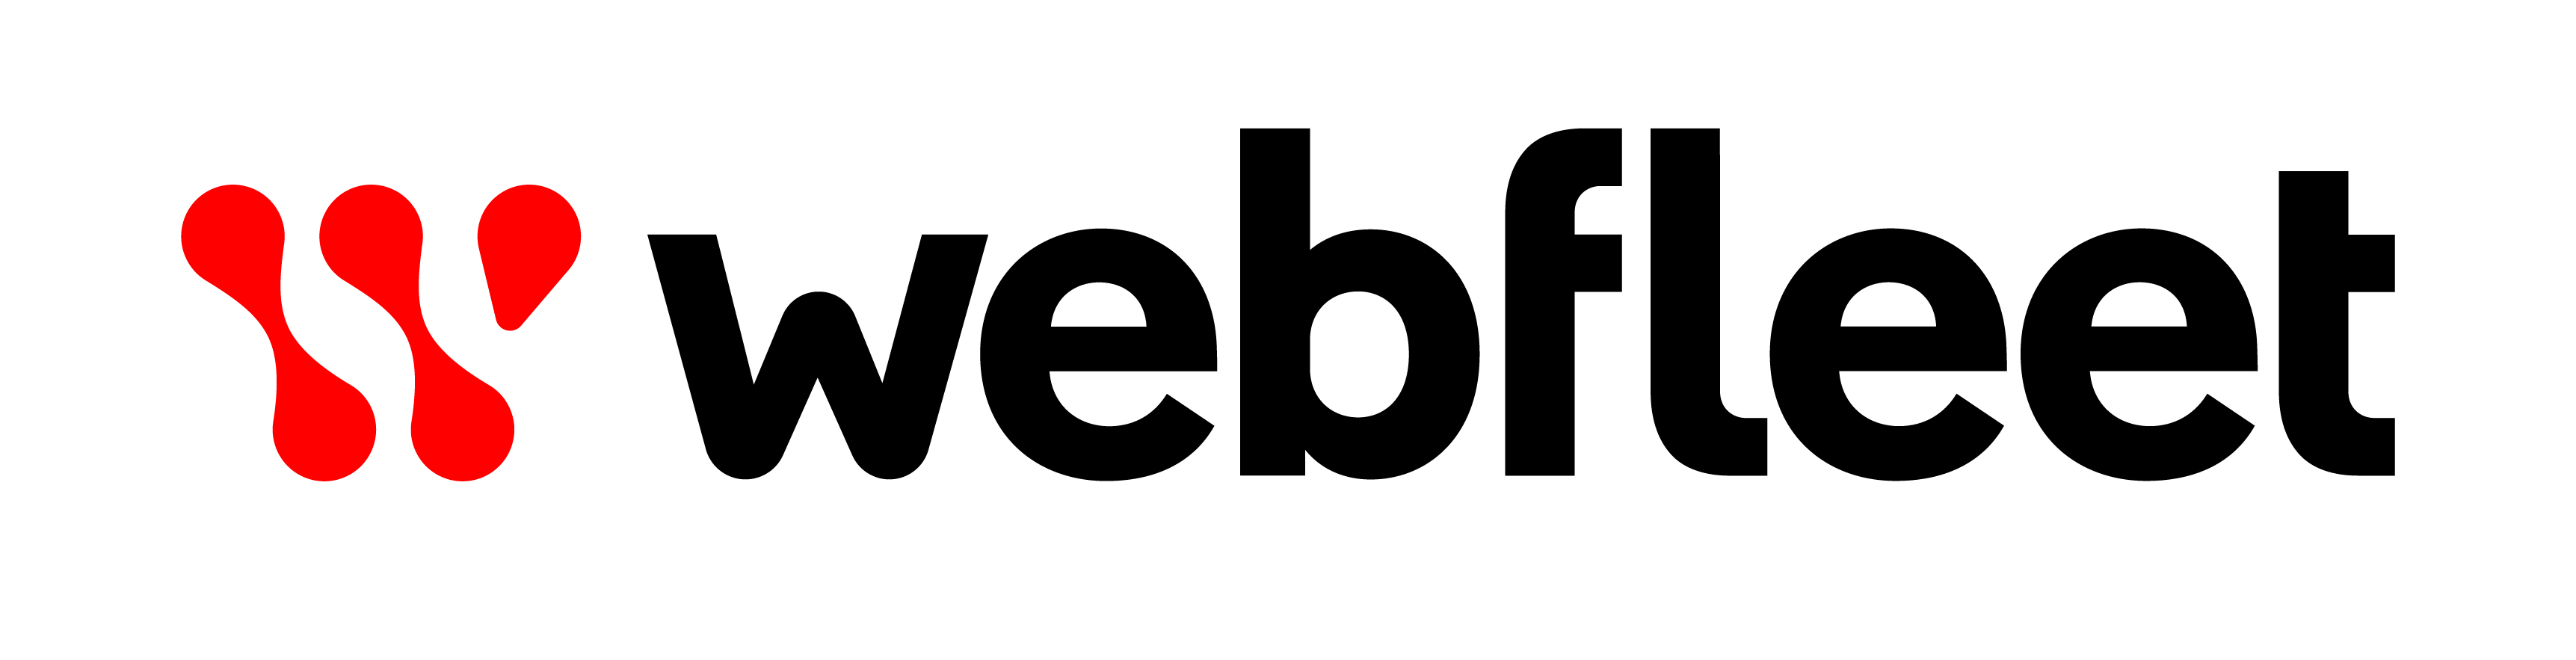 WF_logo_CMYK